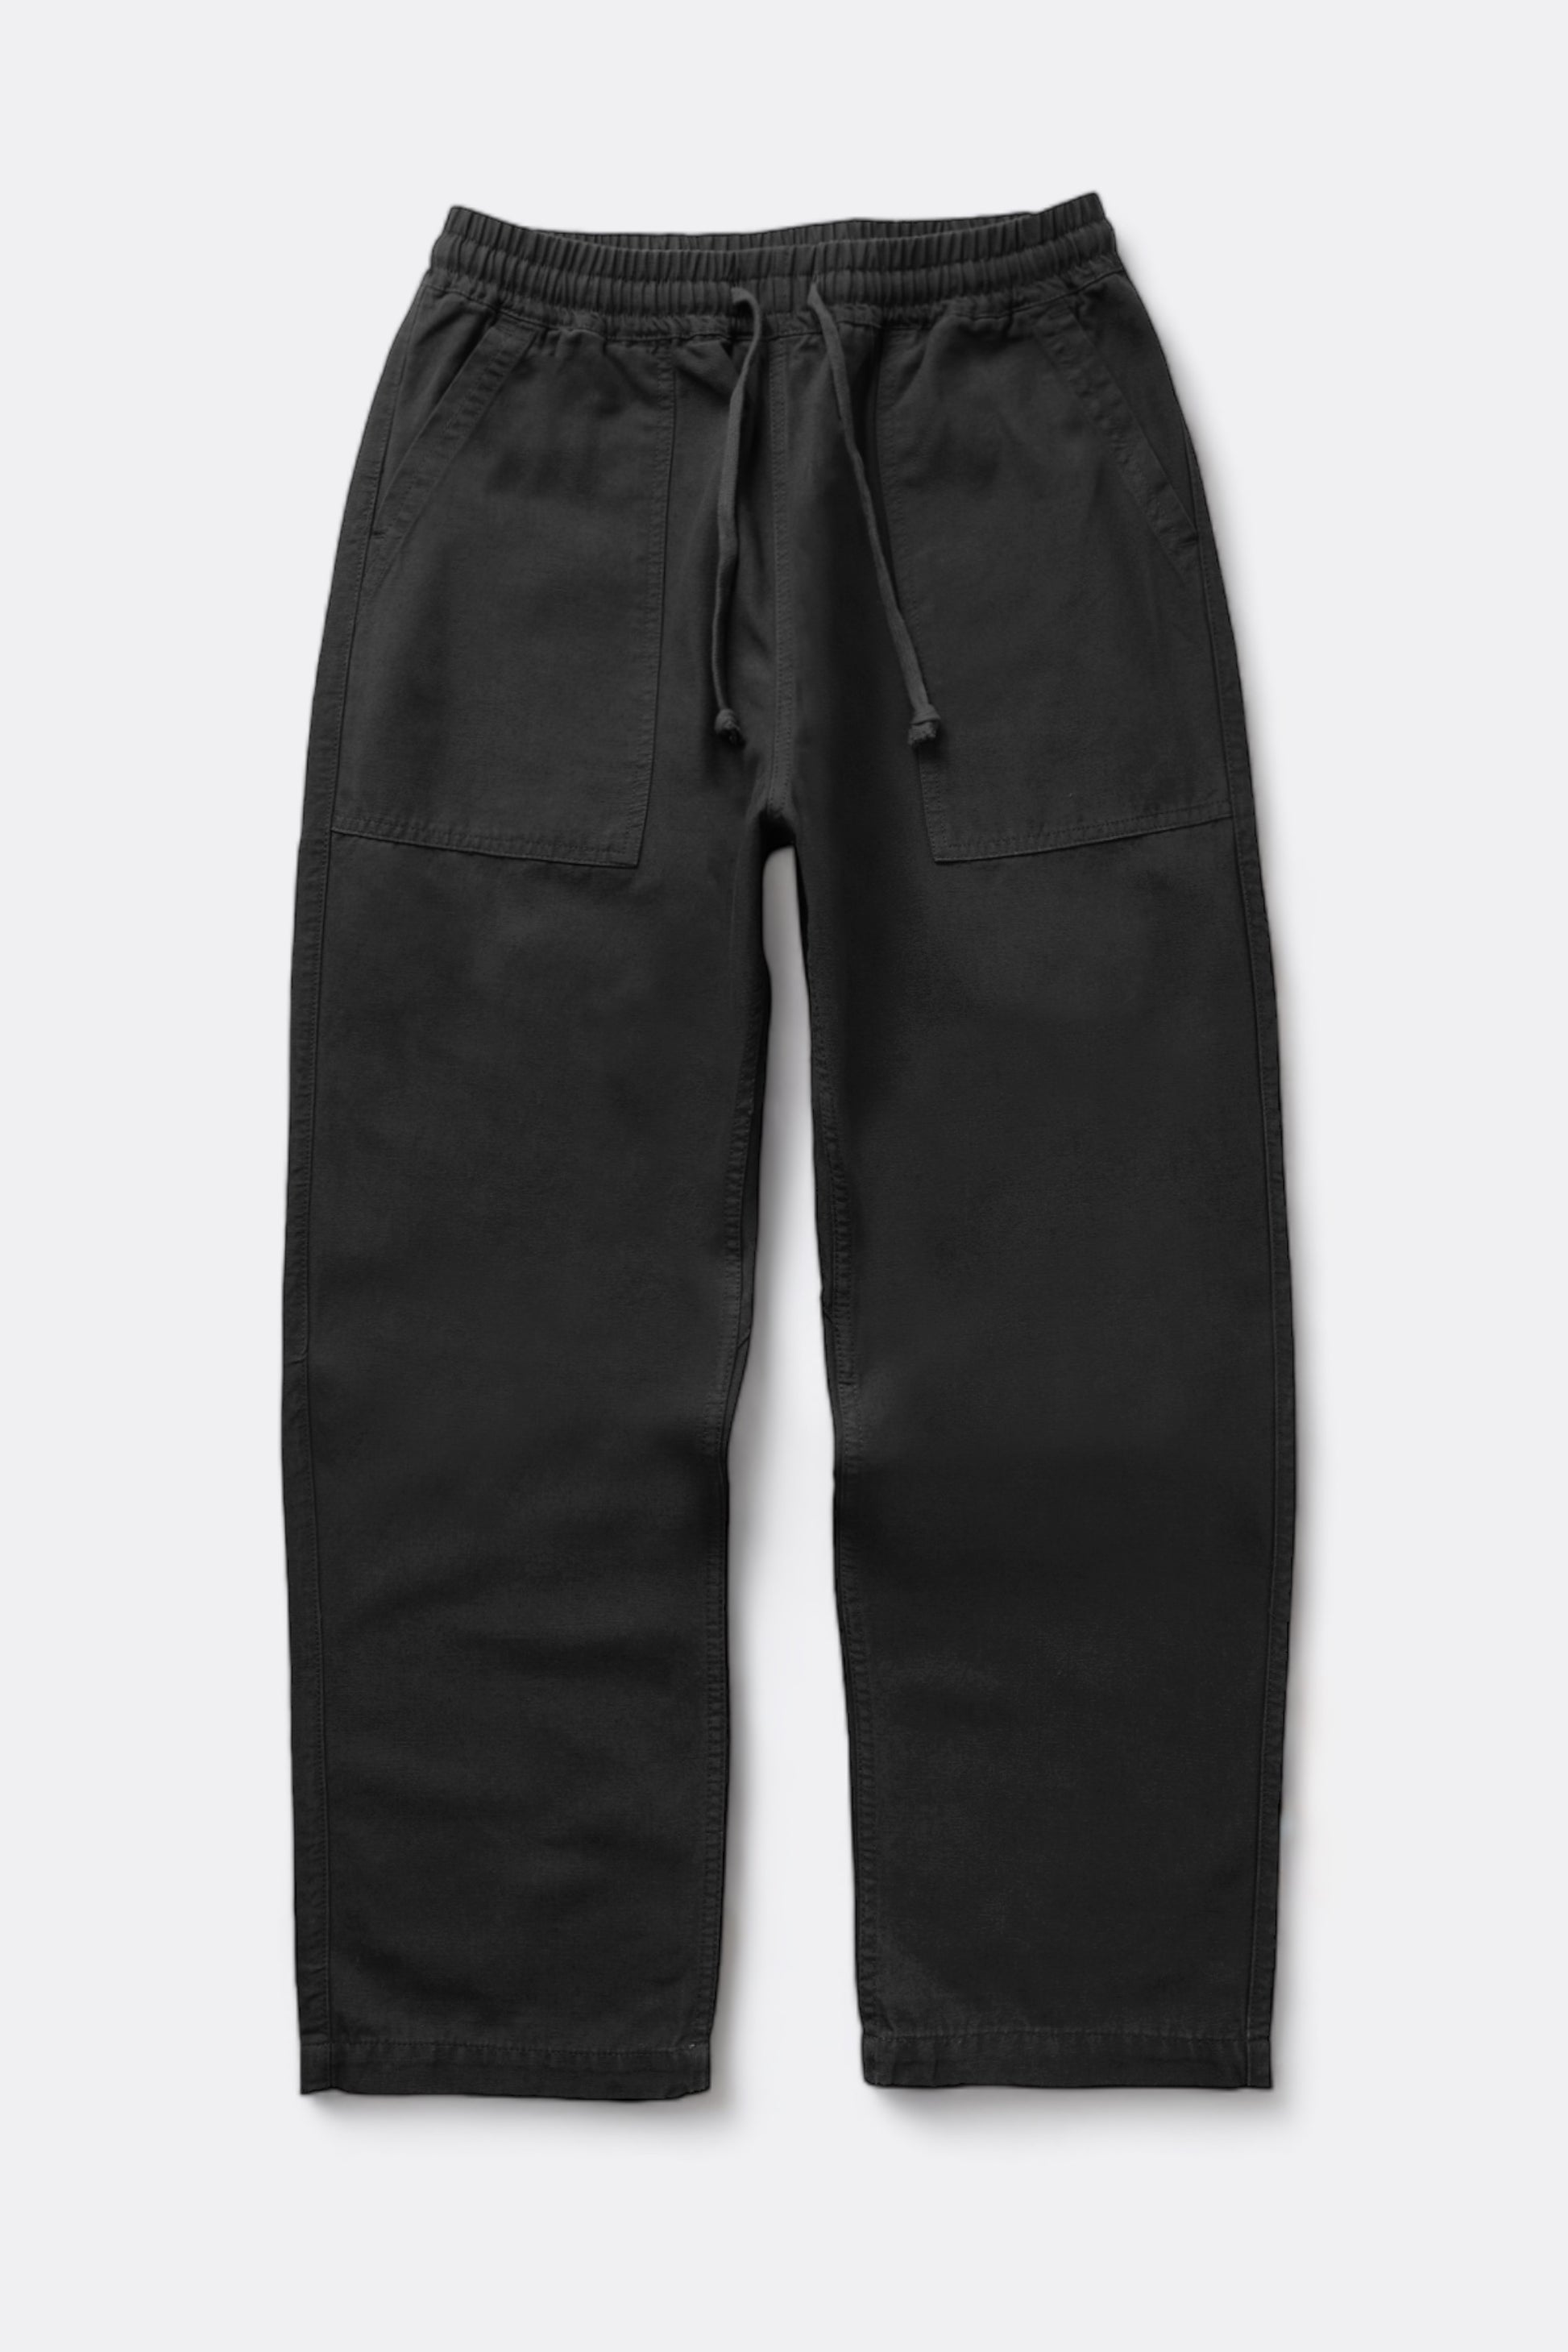 Service Works - Classic Chef Pants (Black)